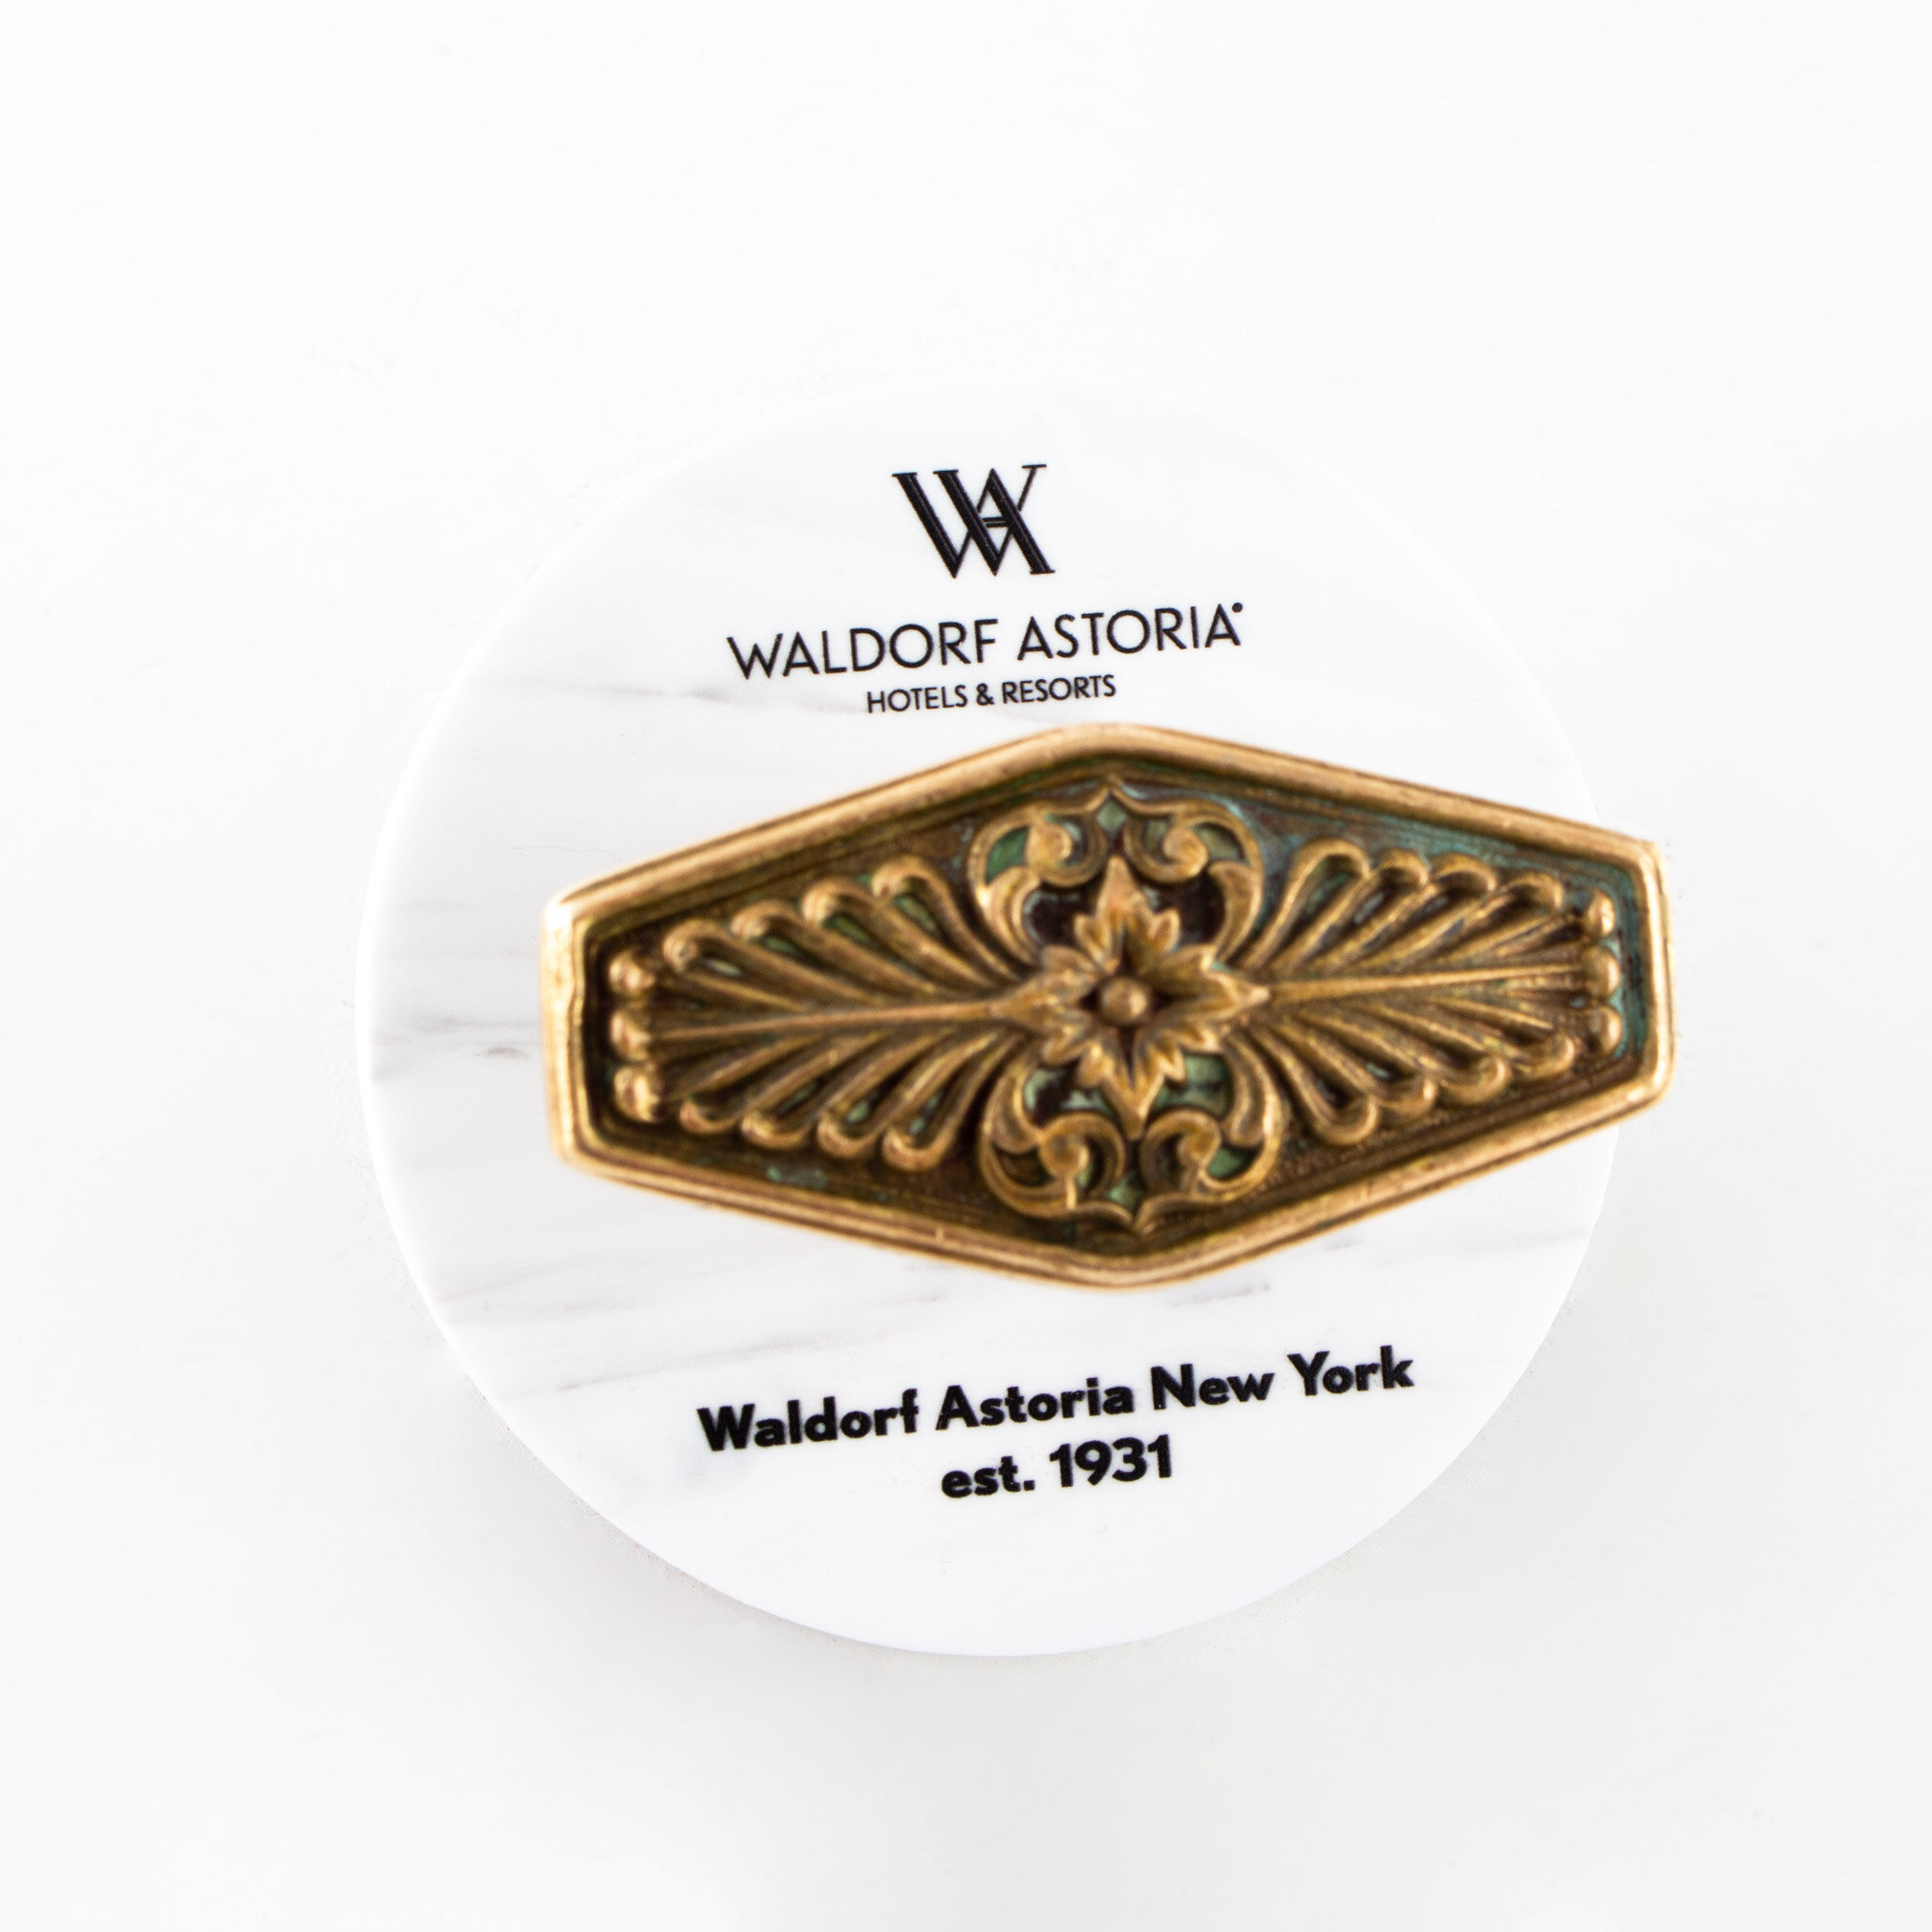 waldorf astoria hotel new york custom gifts